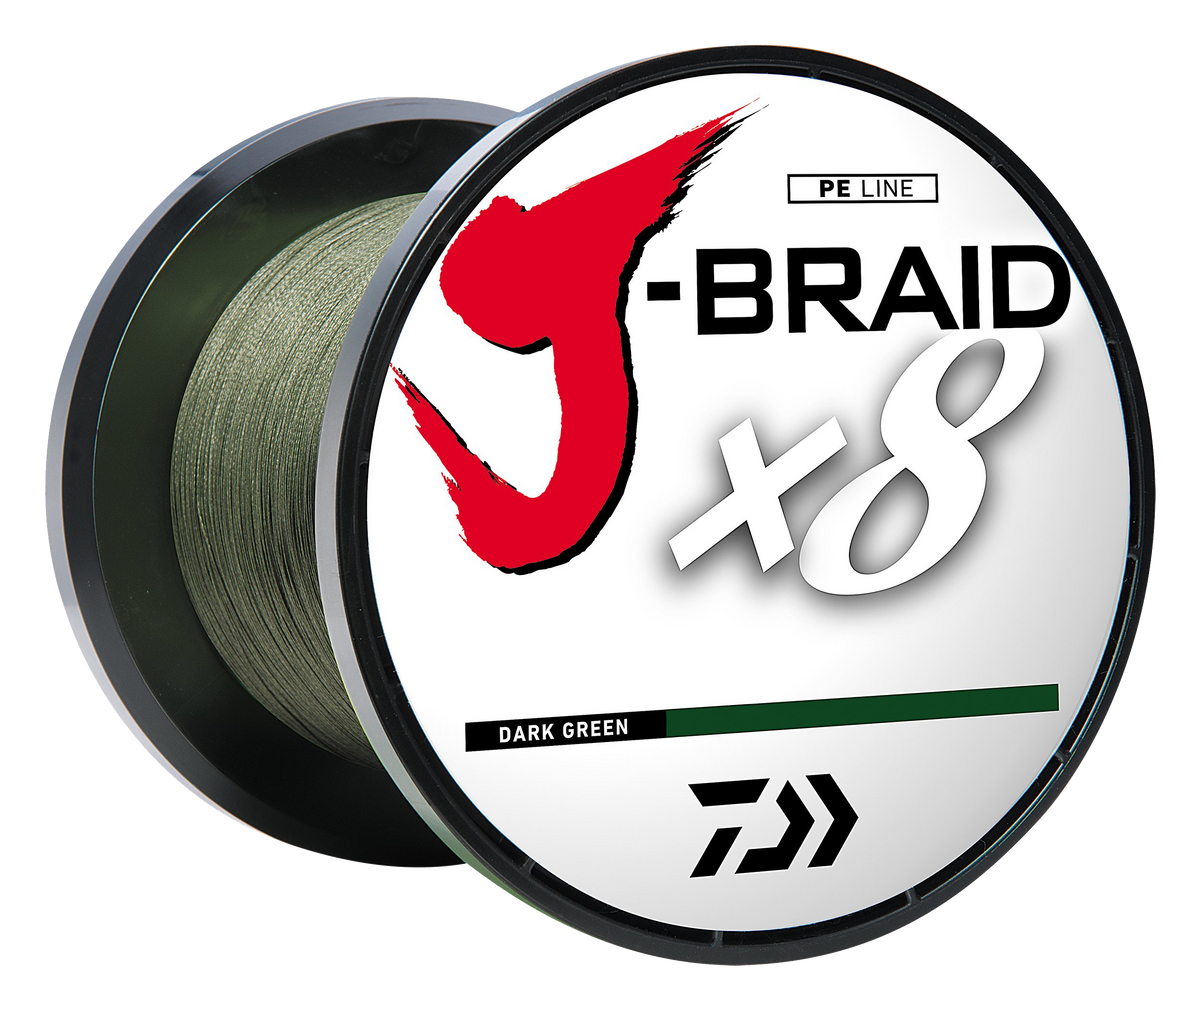 DAIWA J-BRAID X8 GRAND PE 8 Strand Weave Braided Line Green/Multi Color  150m 10LB-60LB Max Drag Made In Japan Fishing Line - AliExpress